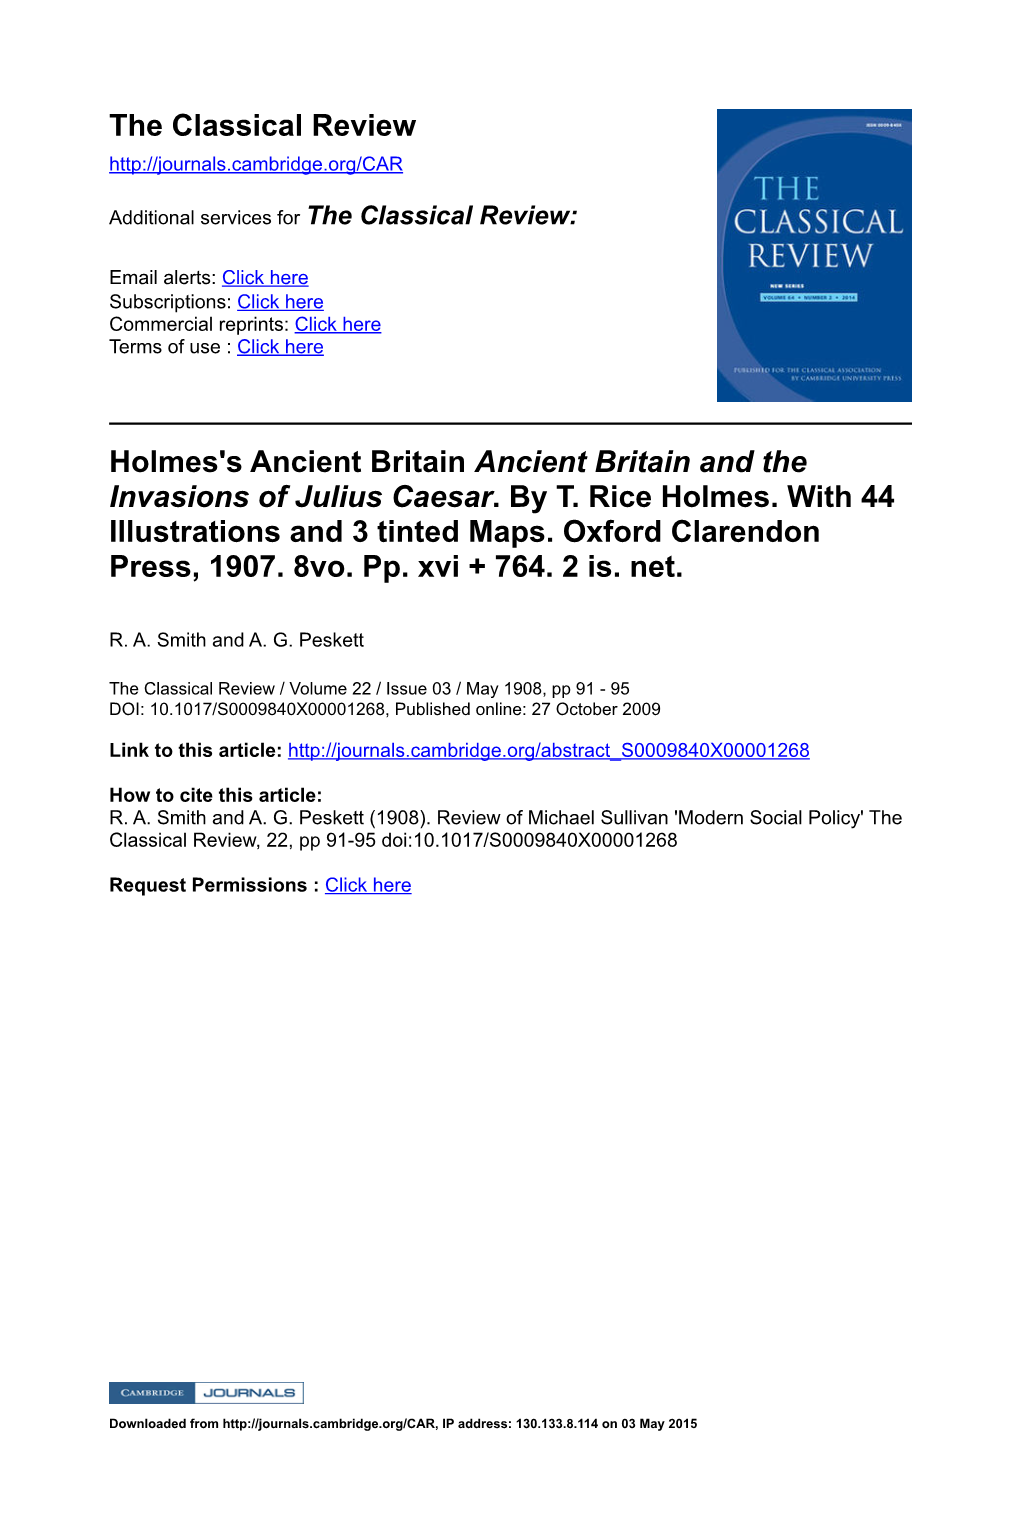 Holmes's Ancient Britain Ancient Britain and the Invasions of Julius Caesar